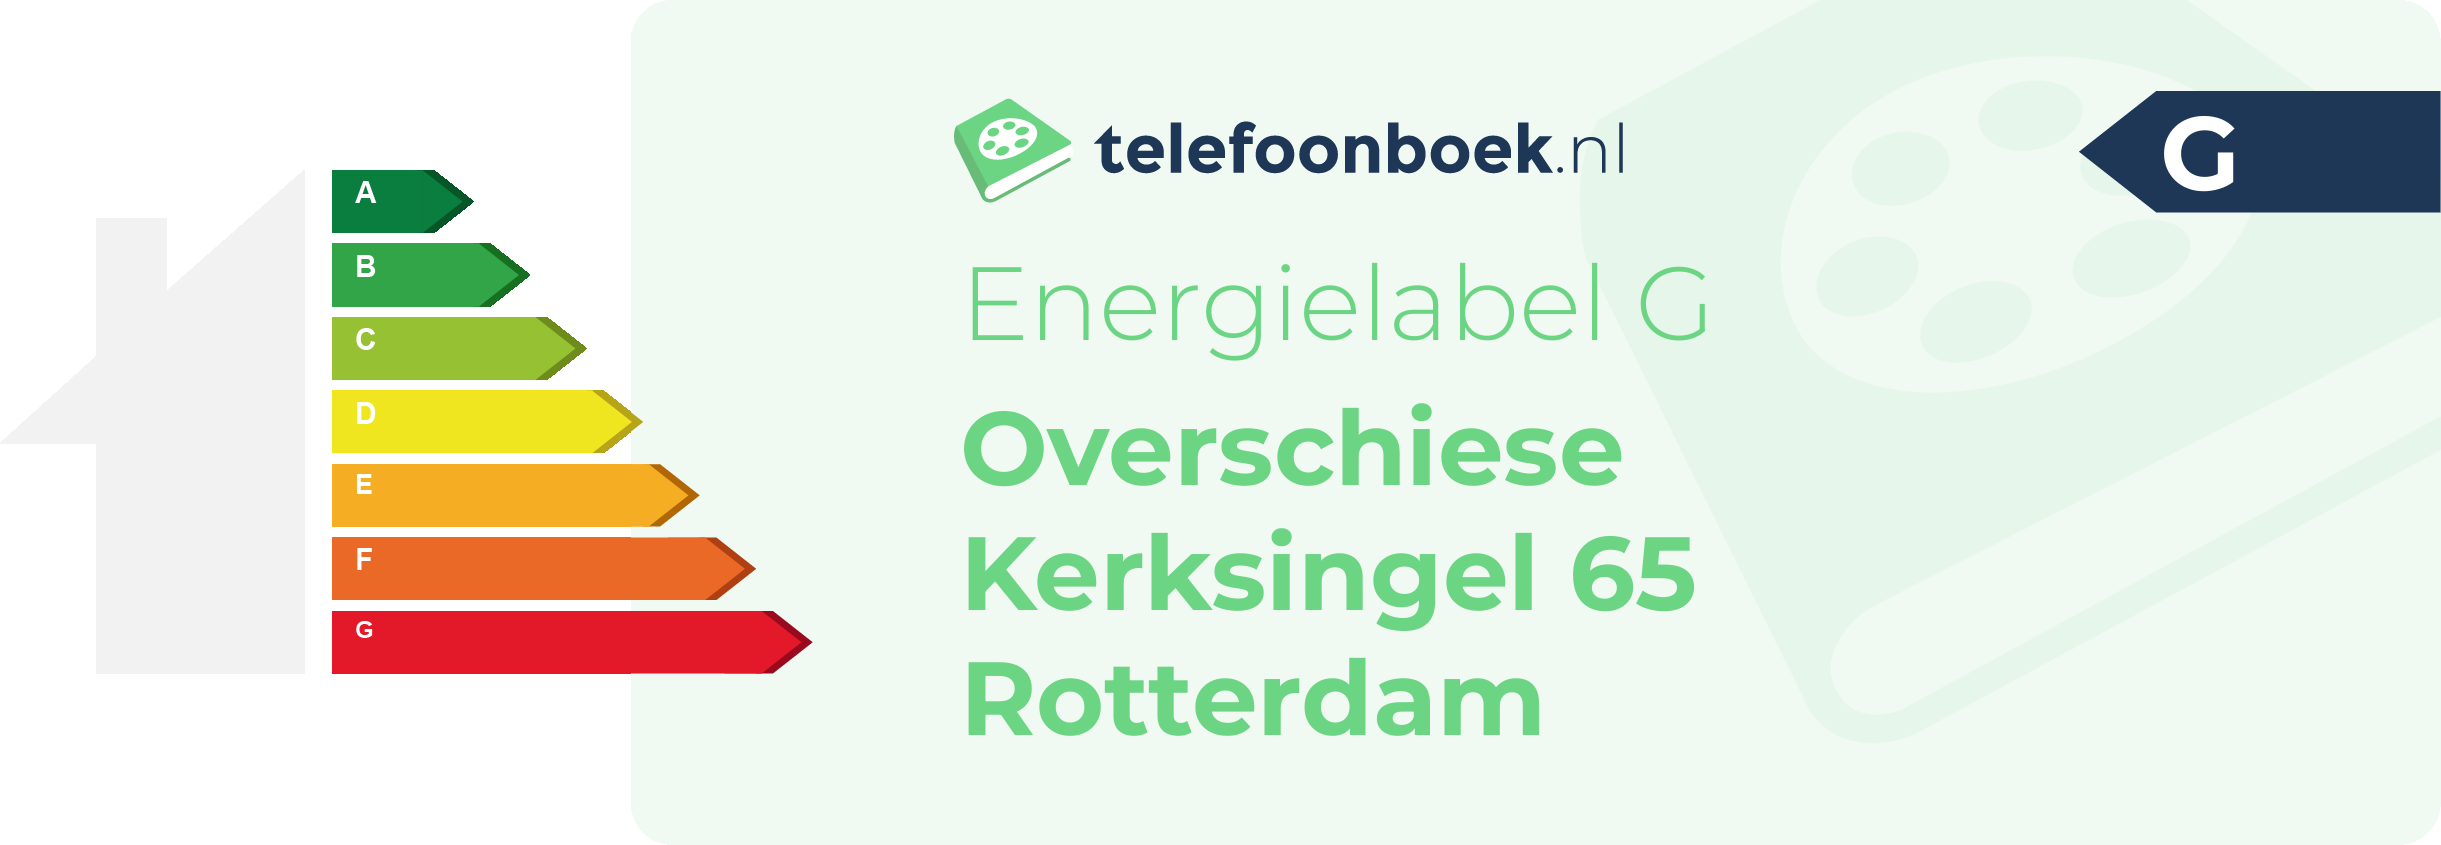 Energielabel Overschiese Kerksingel 65 Rotterdam